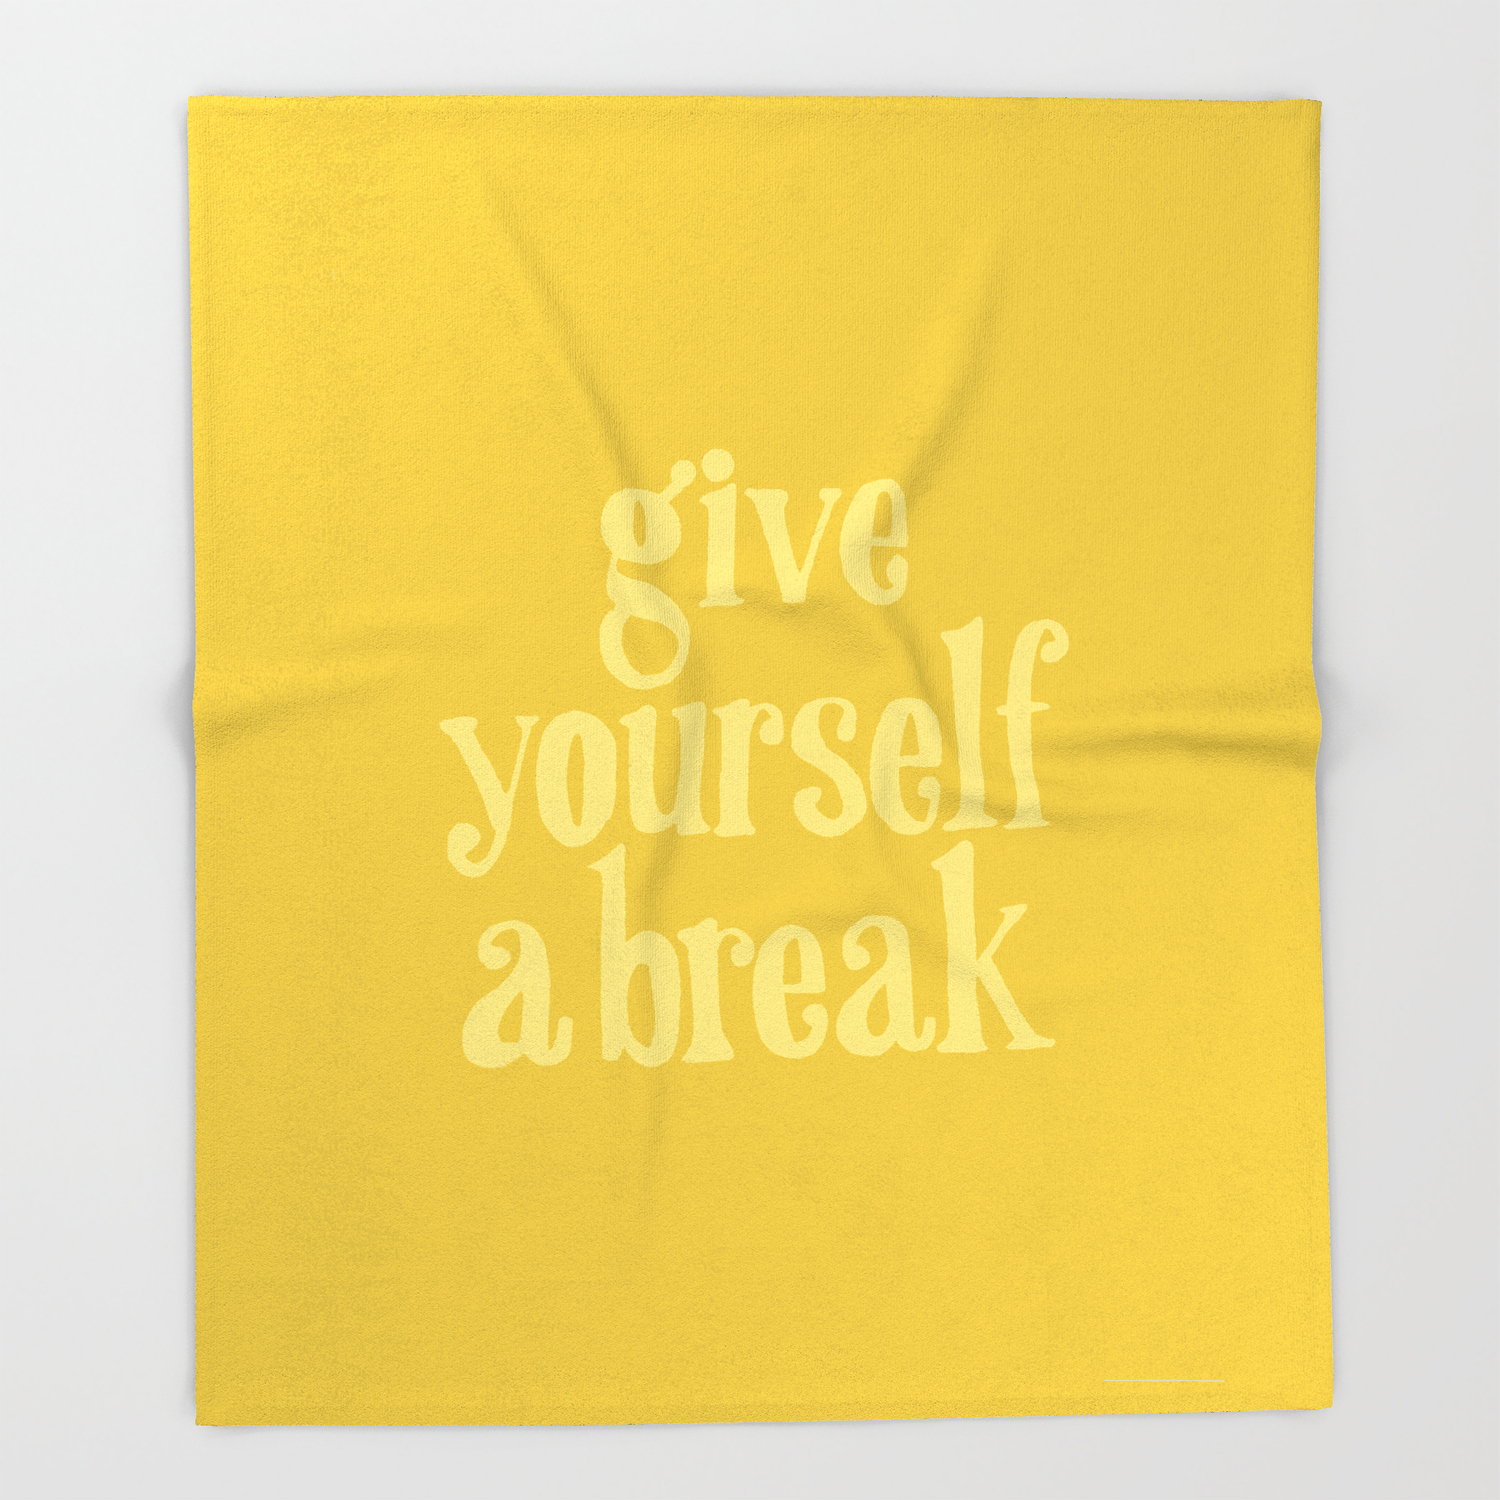 321-give-yourself-a-break.jpg